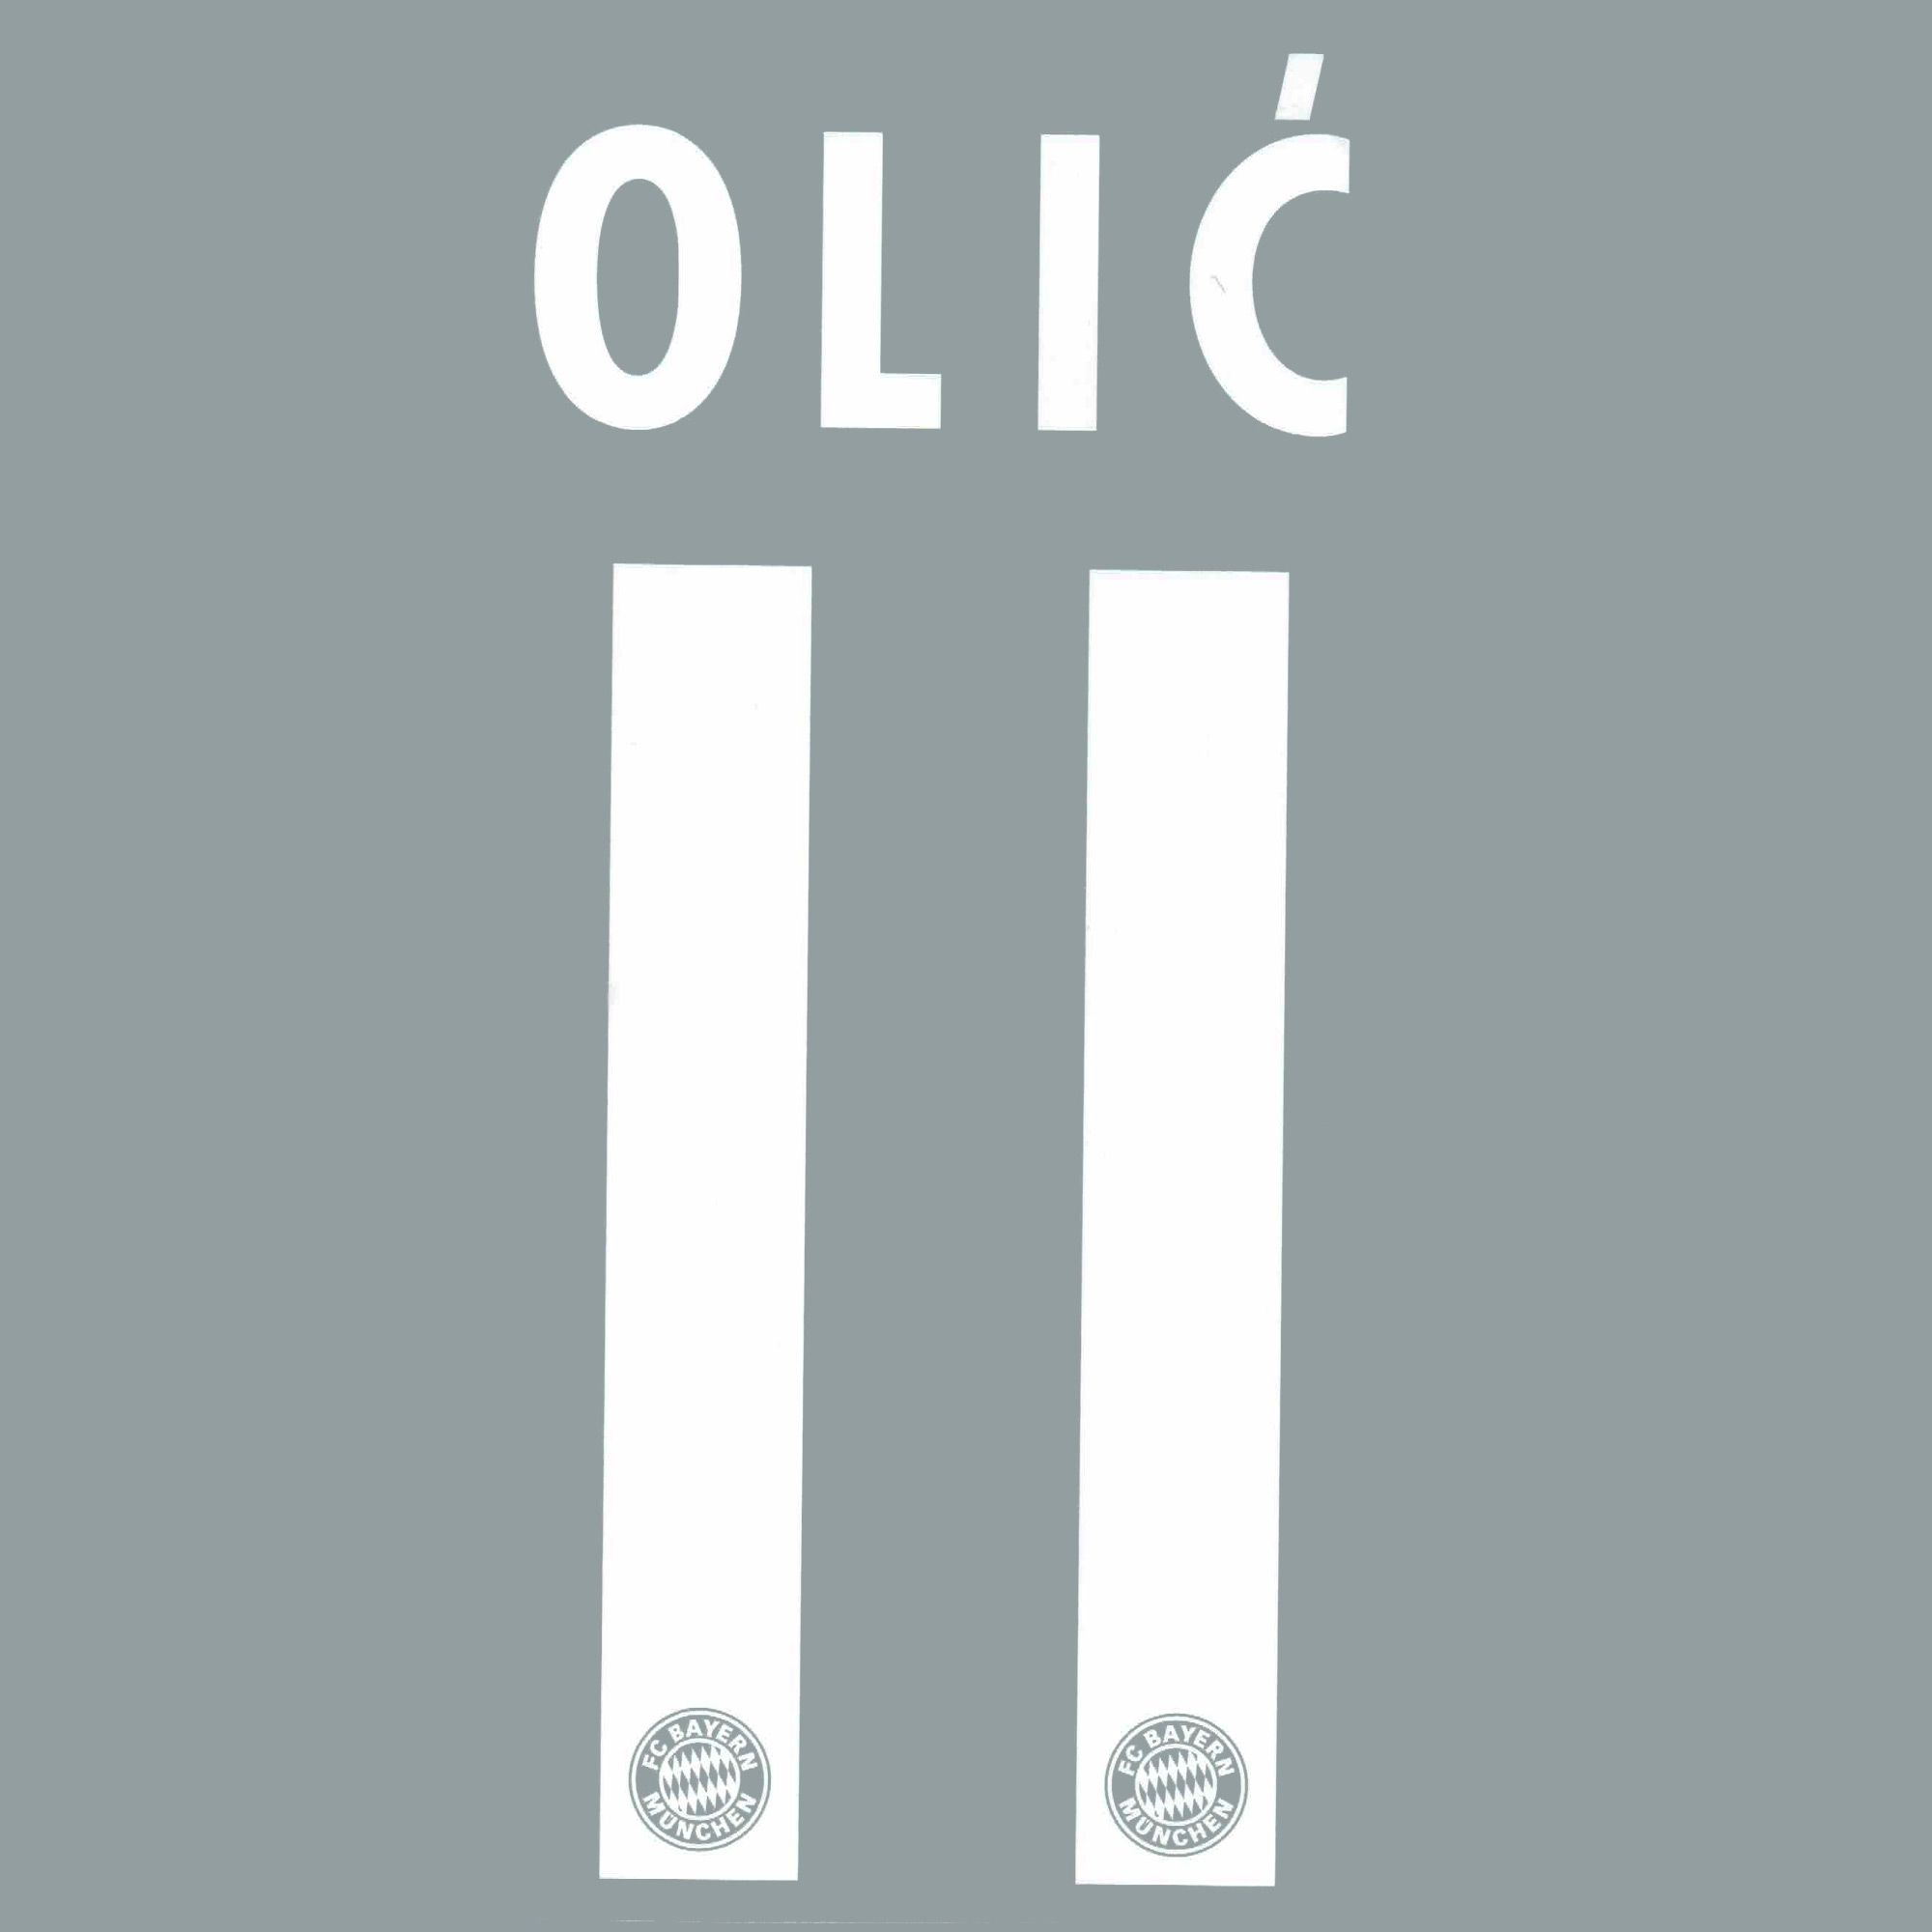 Olic 11 10-11 Bayern Munich C-L